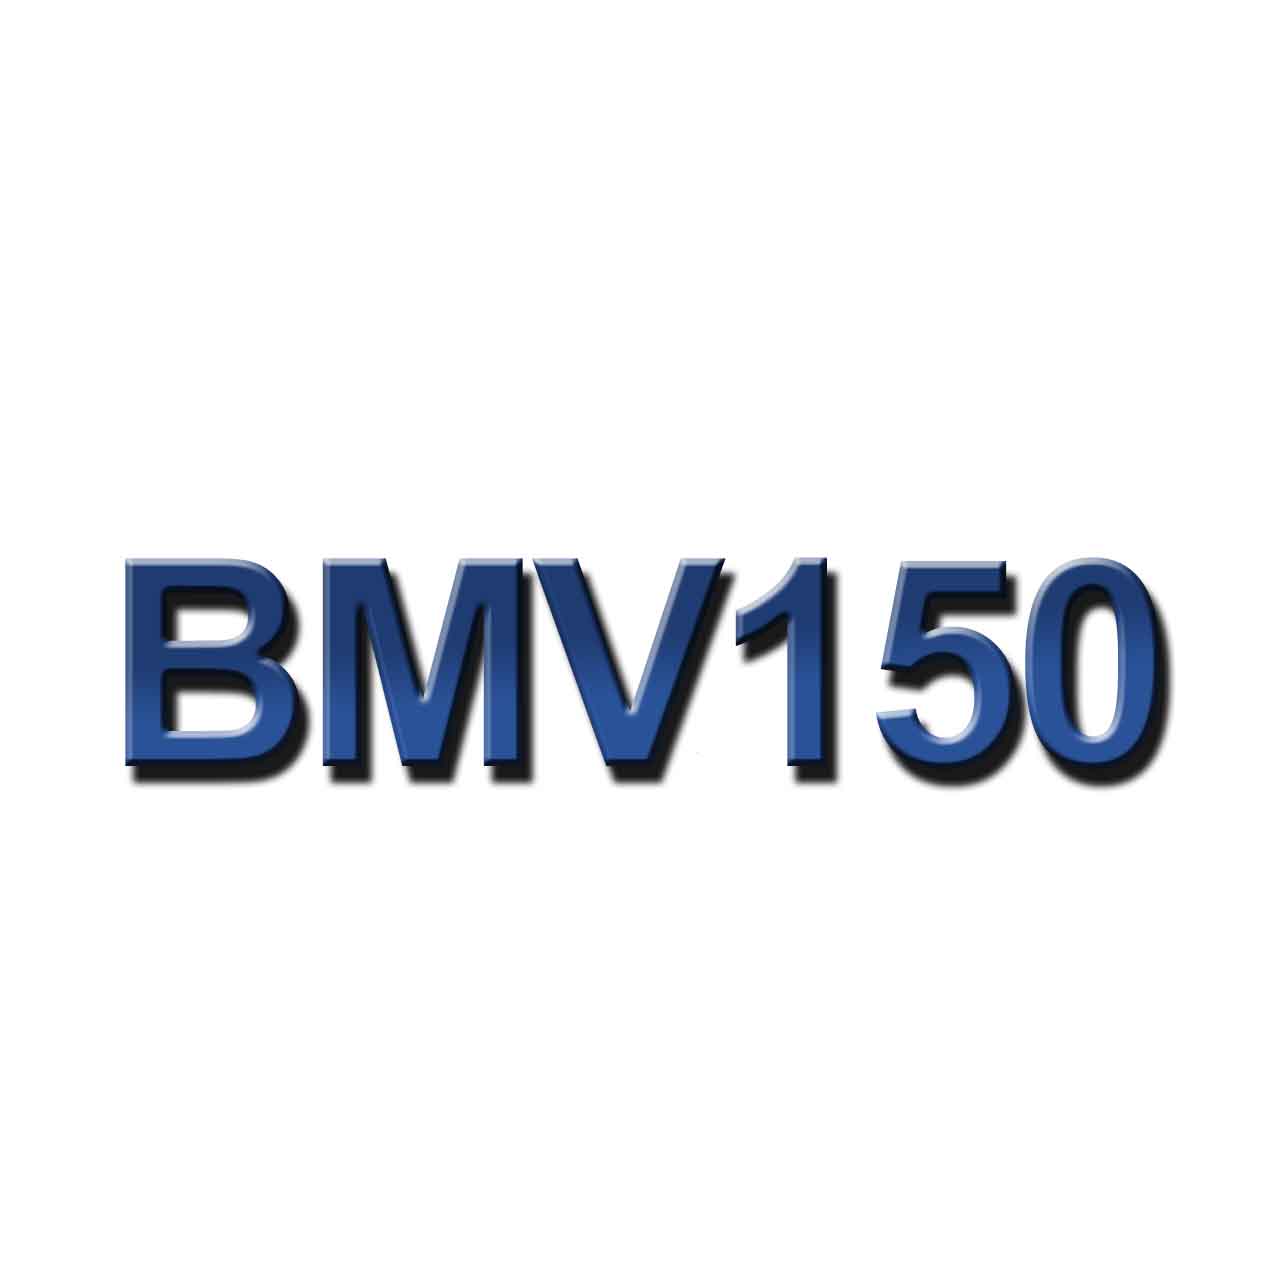 BMV(F)150